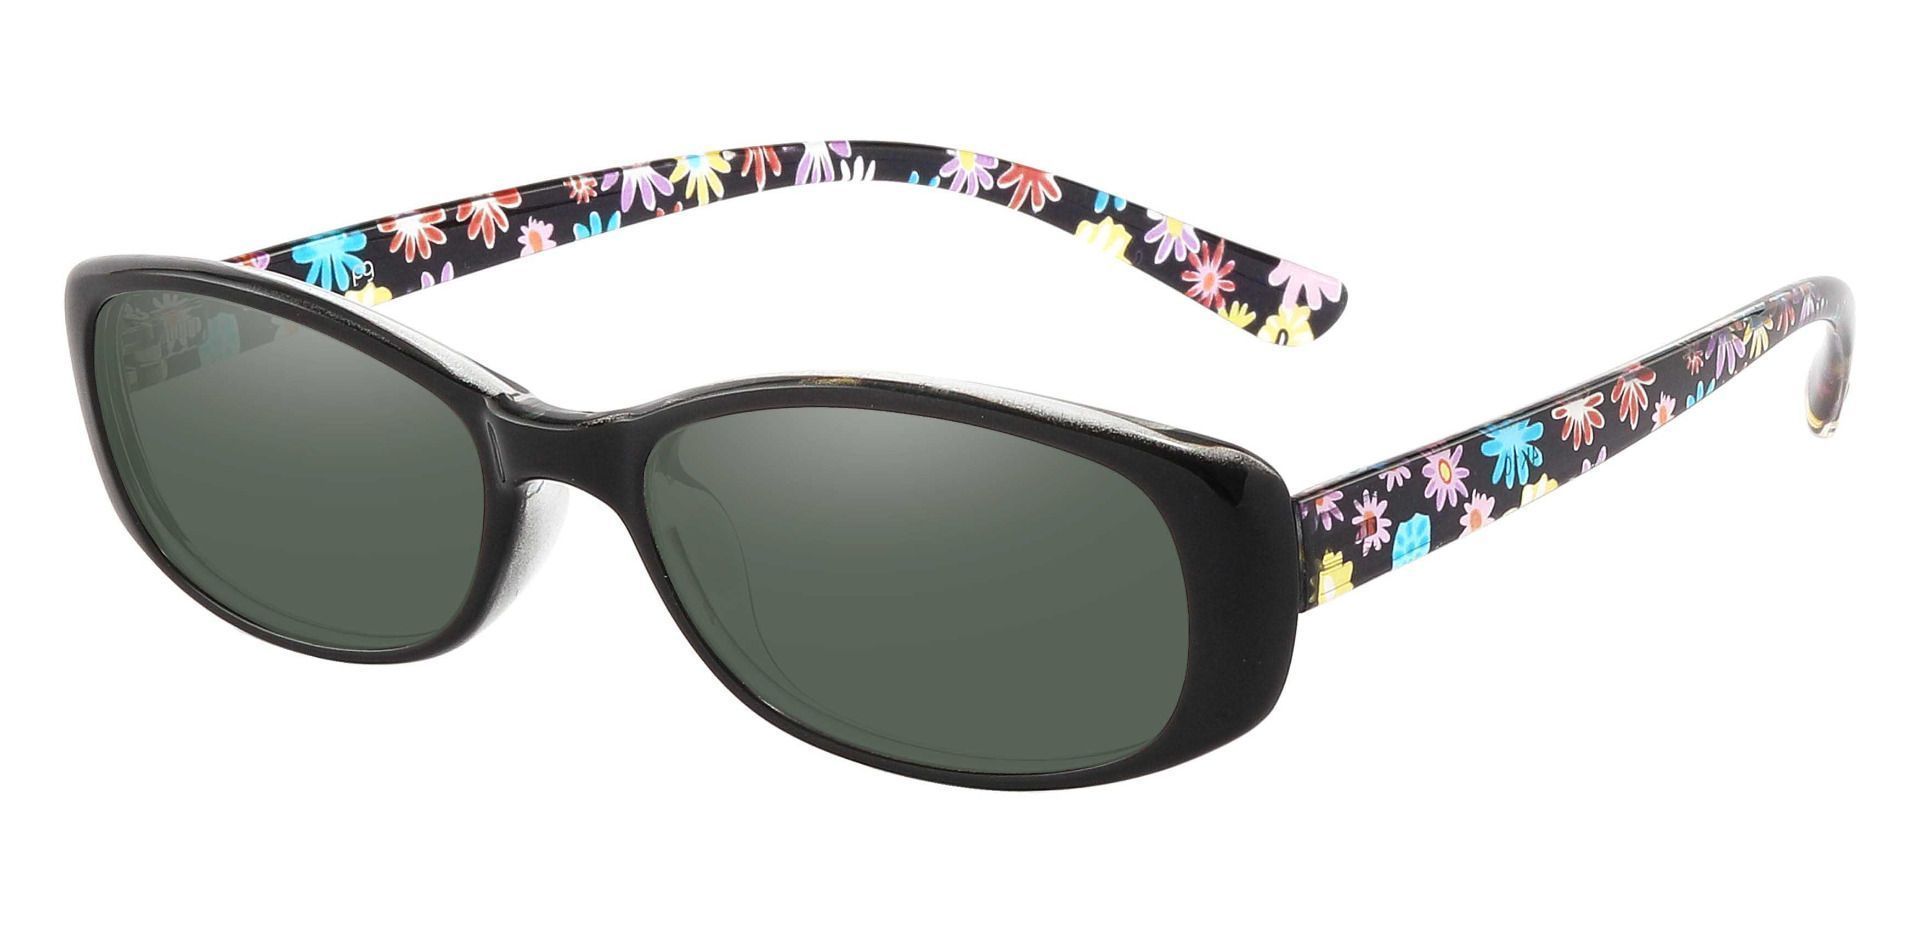 Bethesda Rectangle Non-Rx Sunglasses - Black Frame With Green Lenses